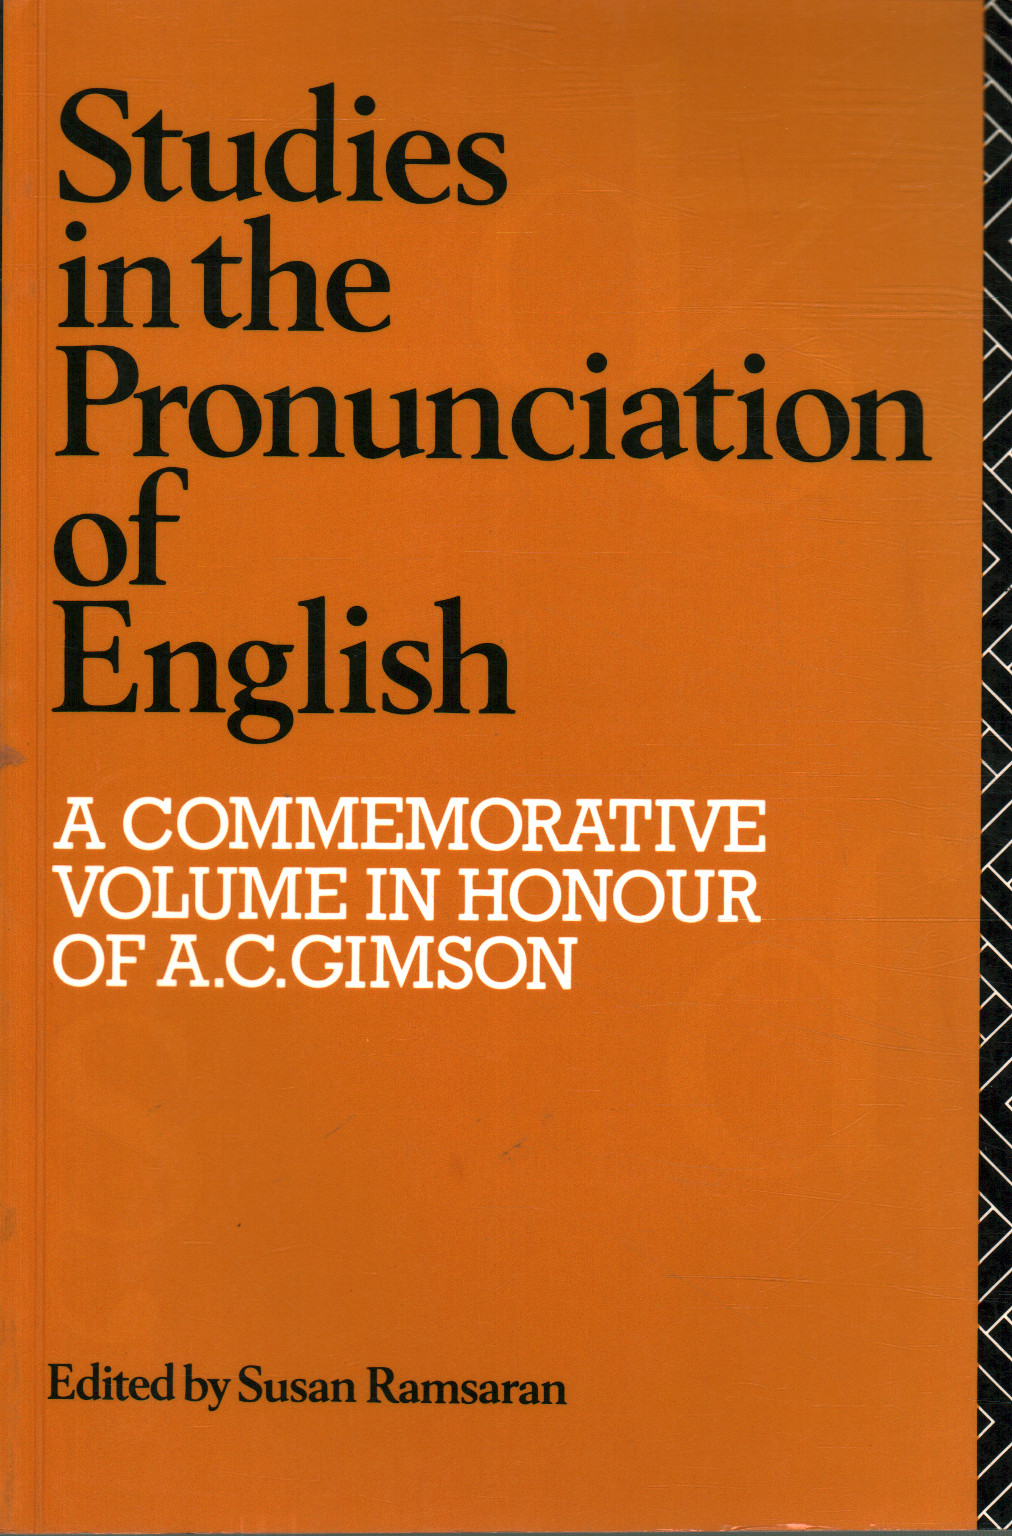 Studies in the Pronunciation of English, Susan Ramsaran